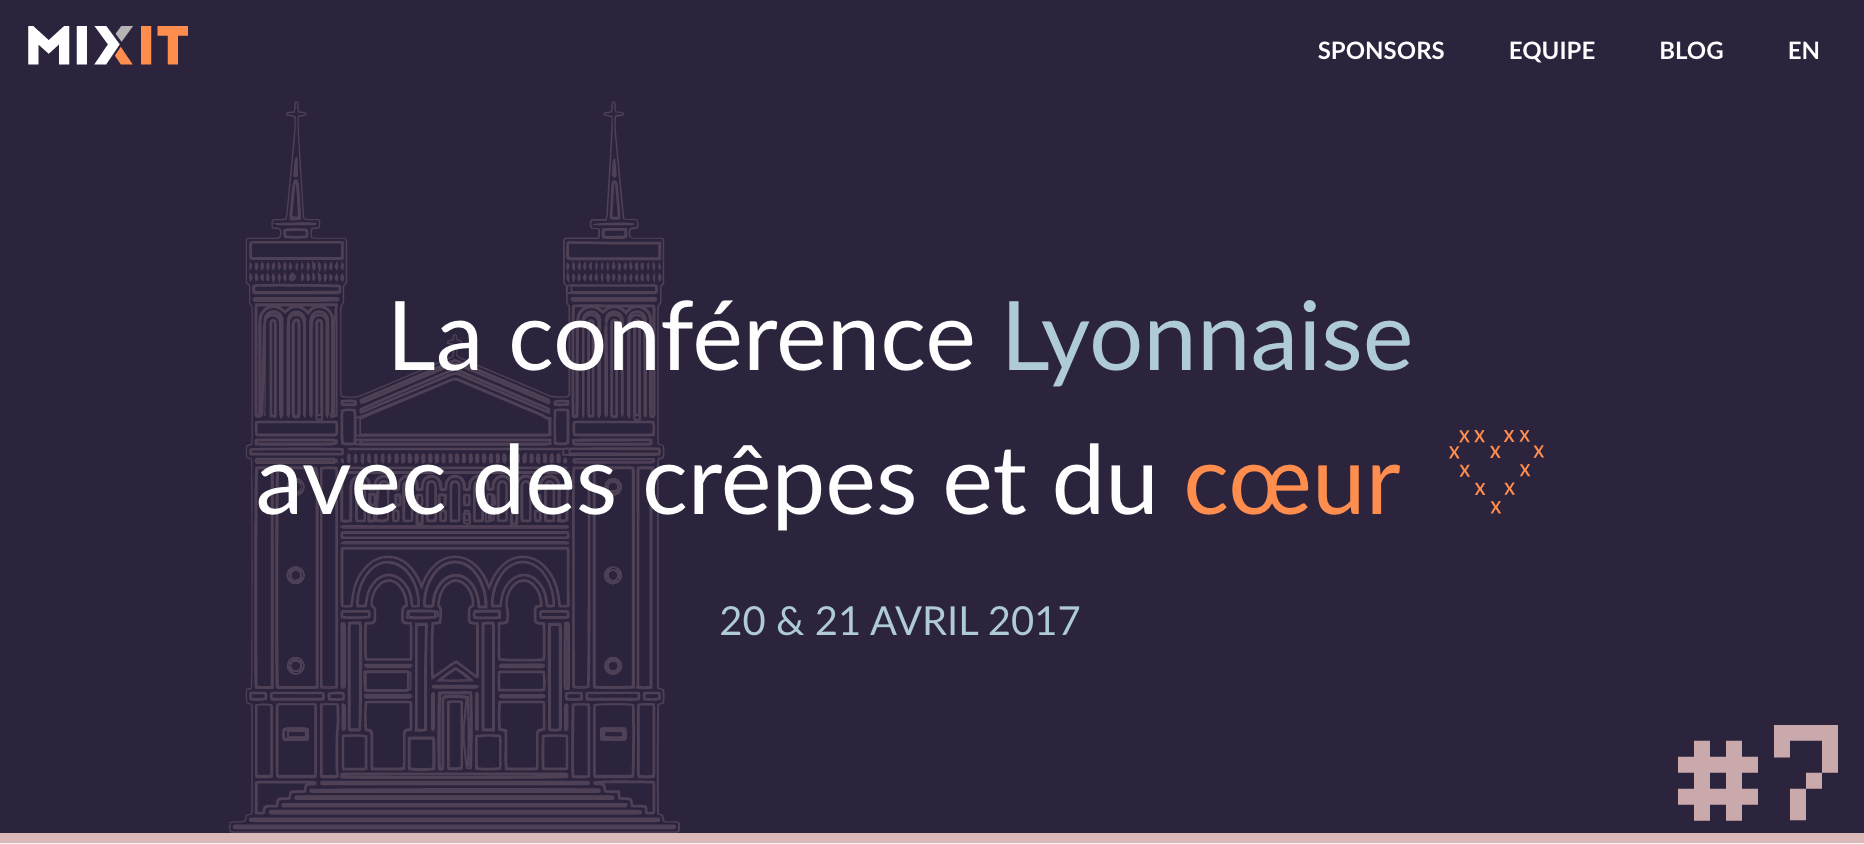 MiXiT homepage header, referencing Lyon iconic basilic